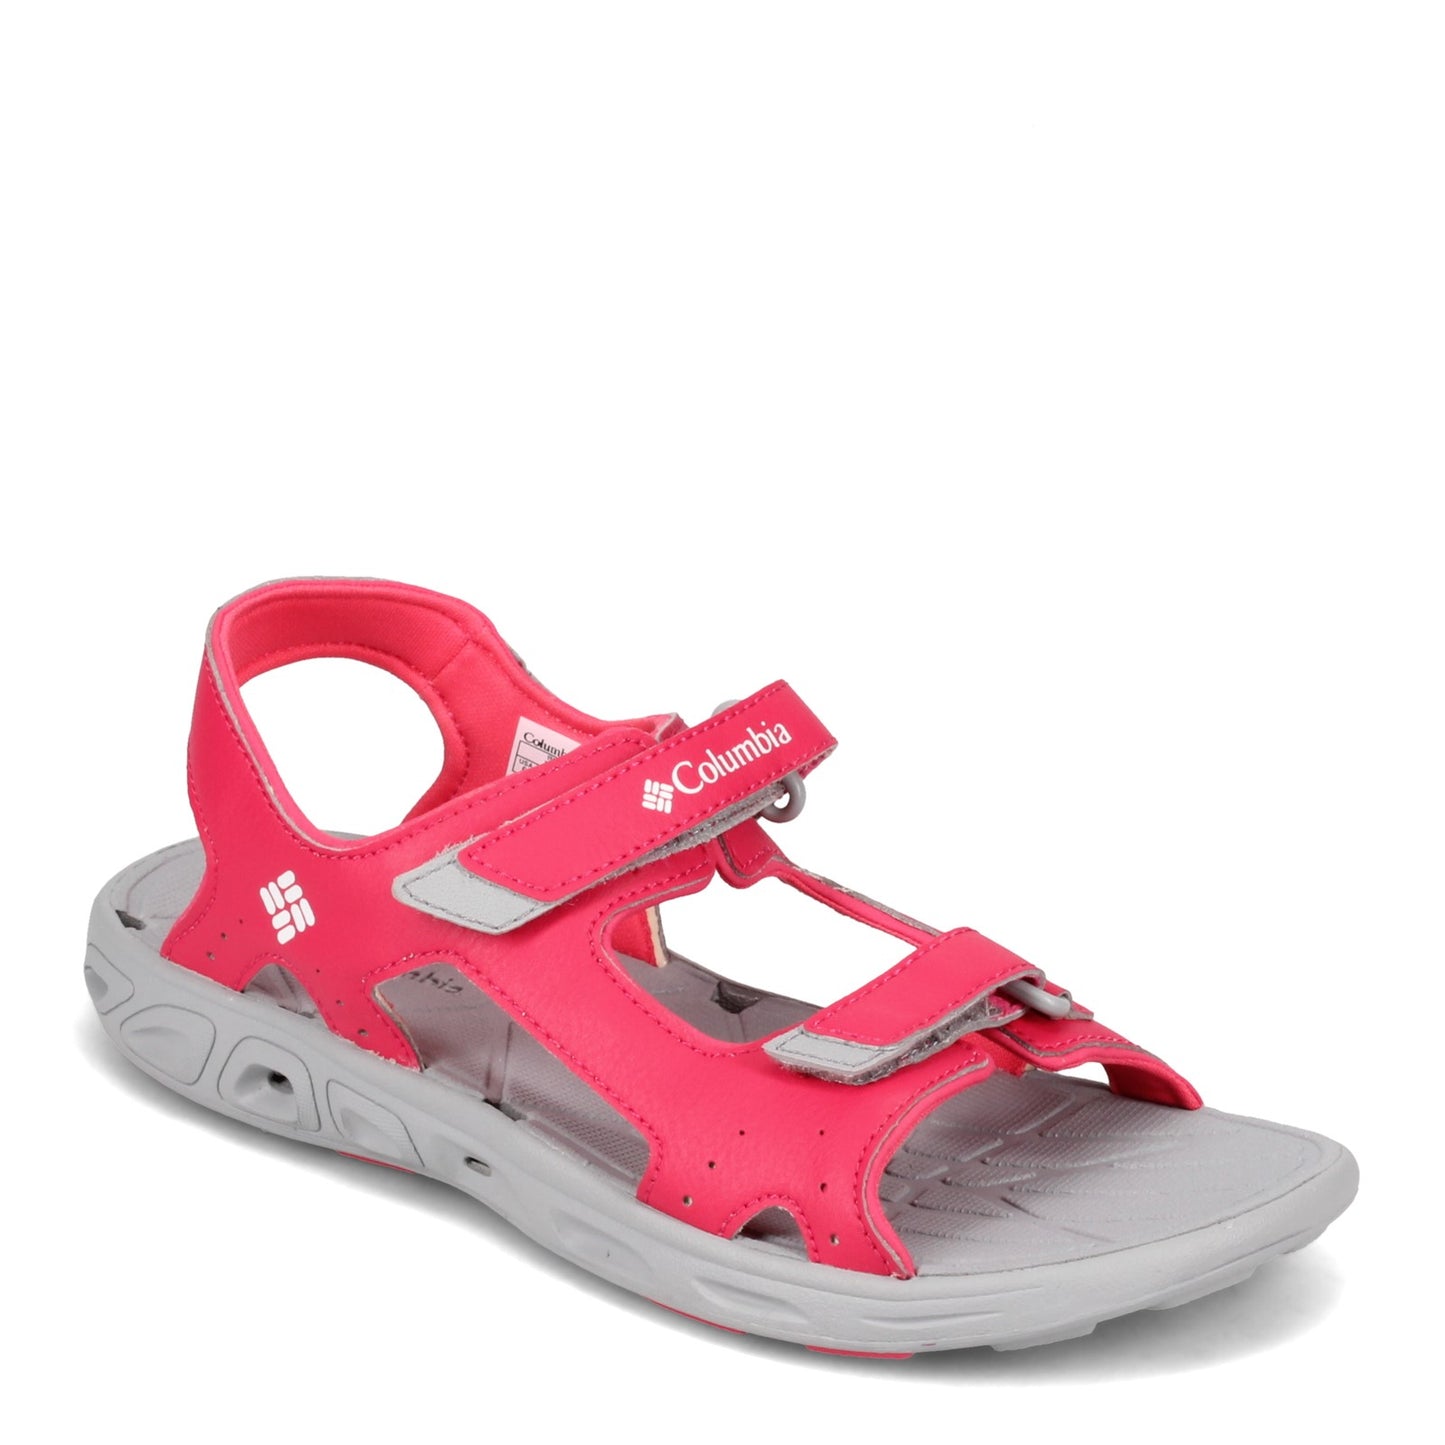 Peltz Shoes  Girl's Columbia Techsun Sandal - Little Kid & Big Kid ROSE 1594631-600